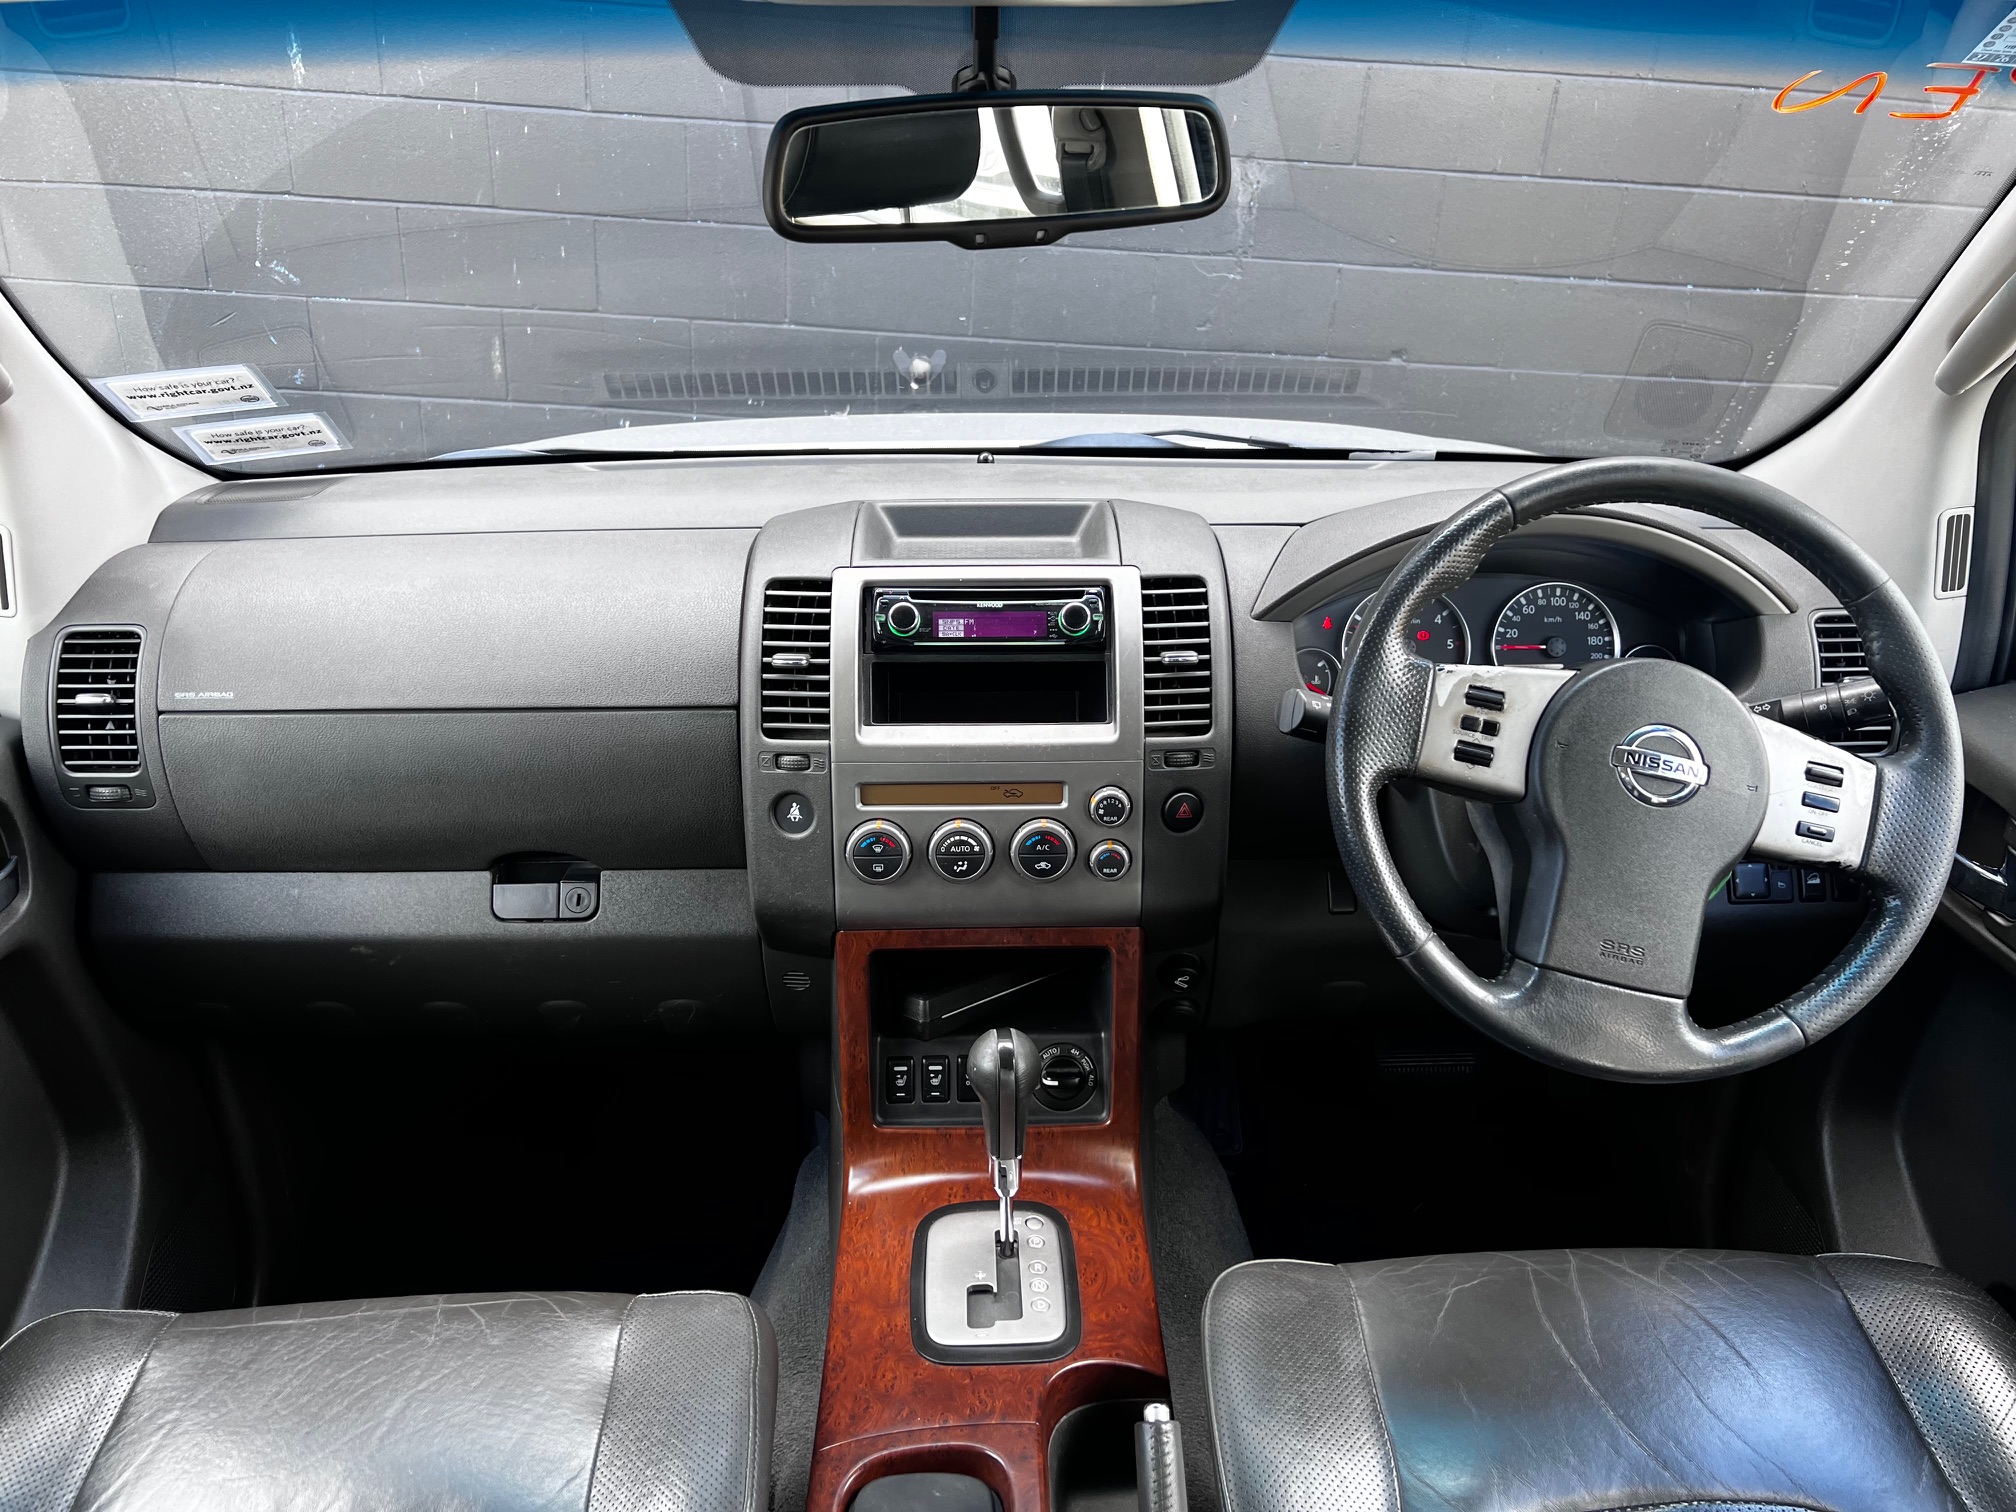 Nissan Pathfinder 2009 Image 15